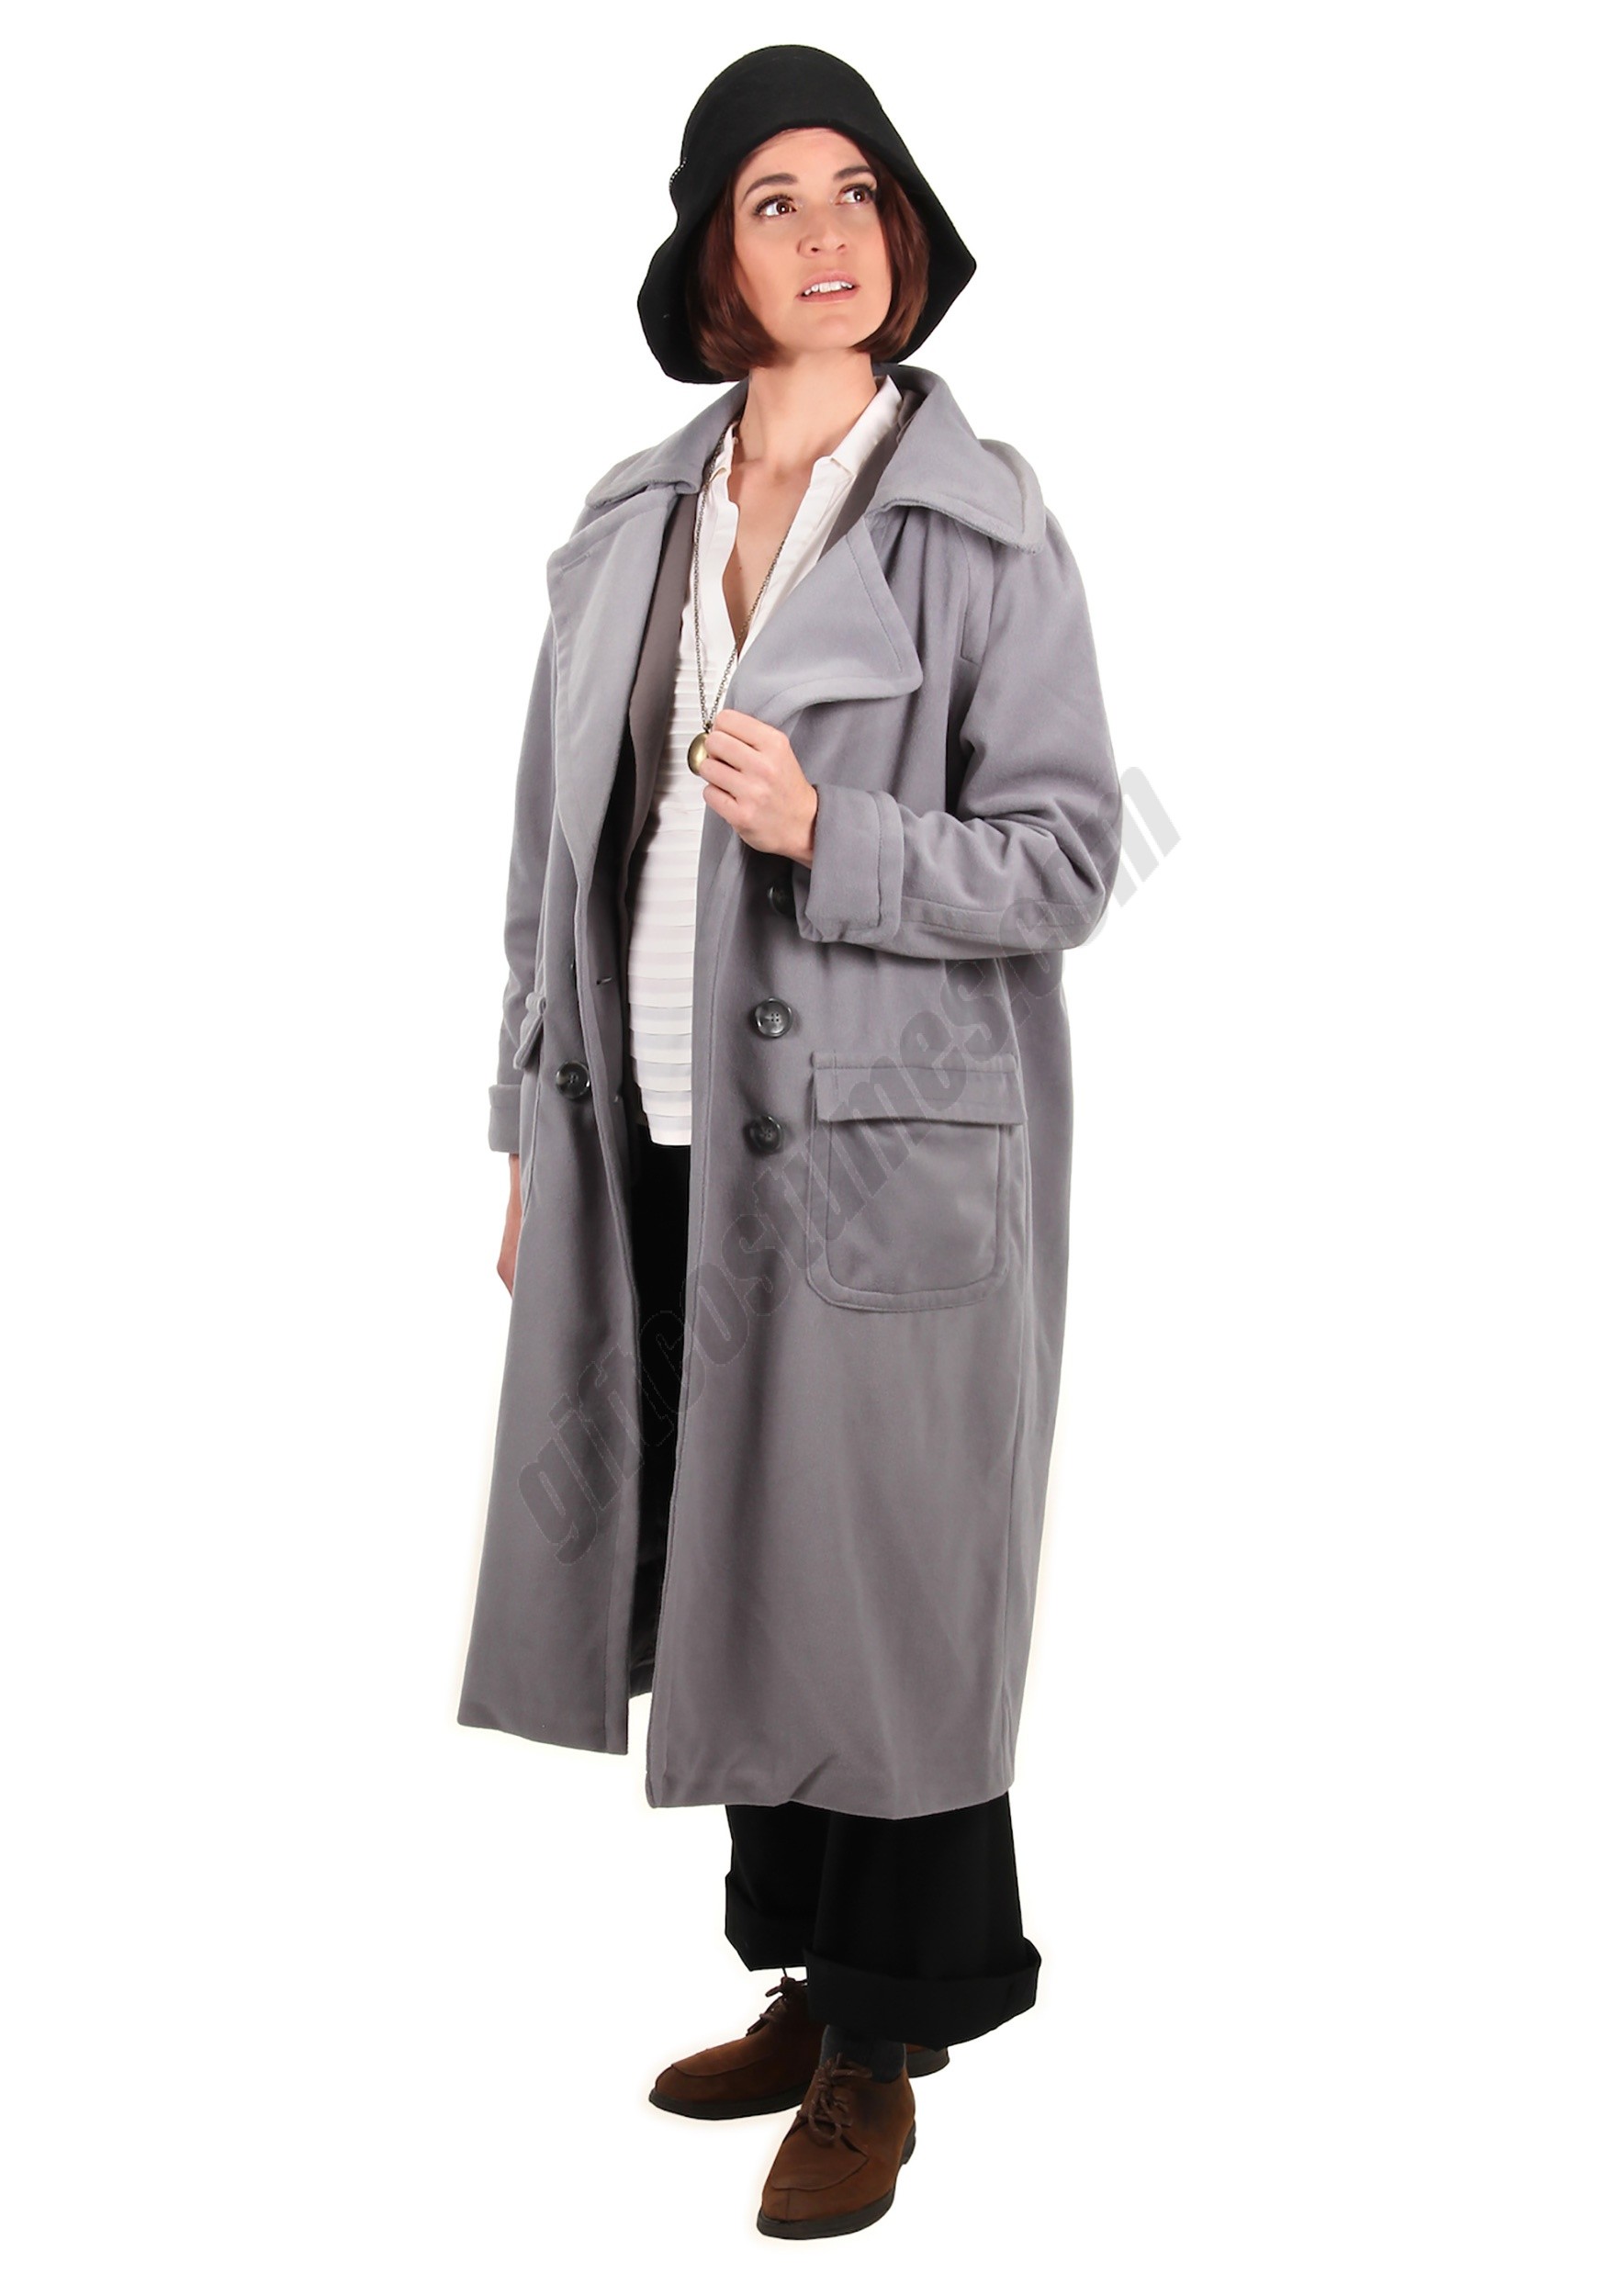 Tina Goldstein Coat Costume - Women's - Tina Goldstein Coat Costume - Women's